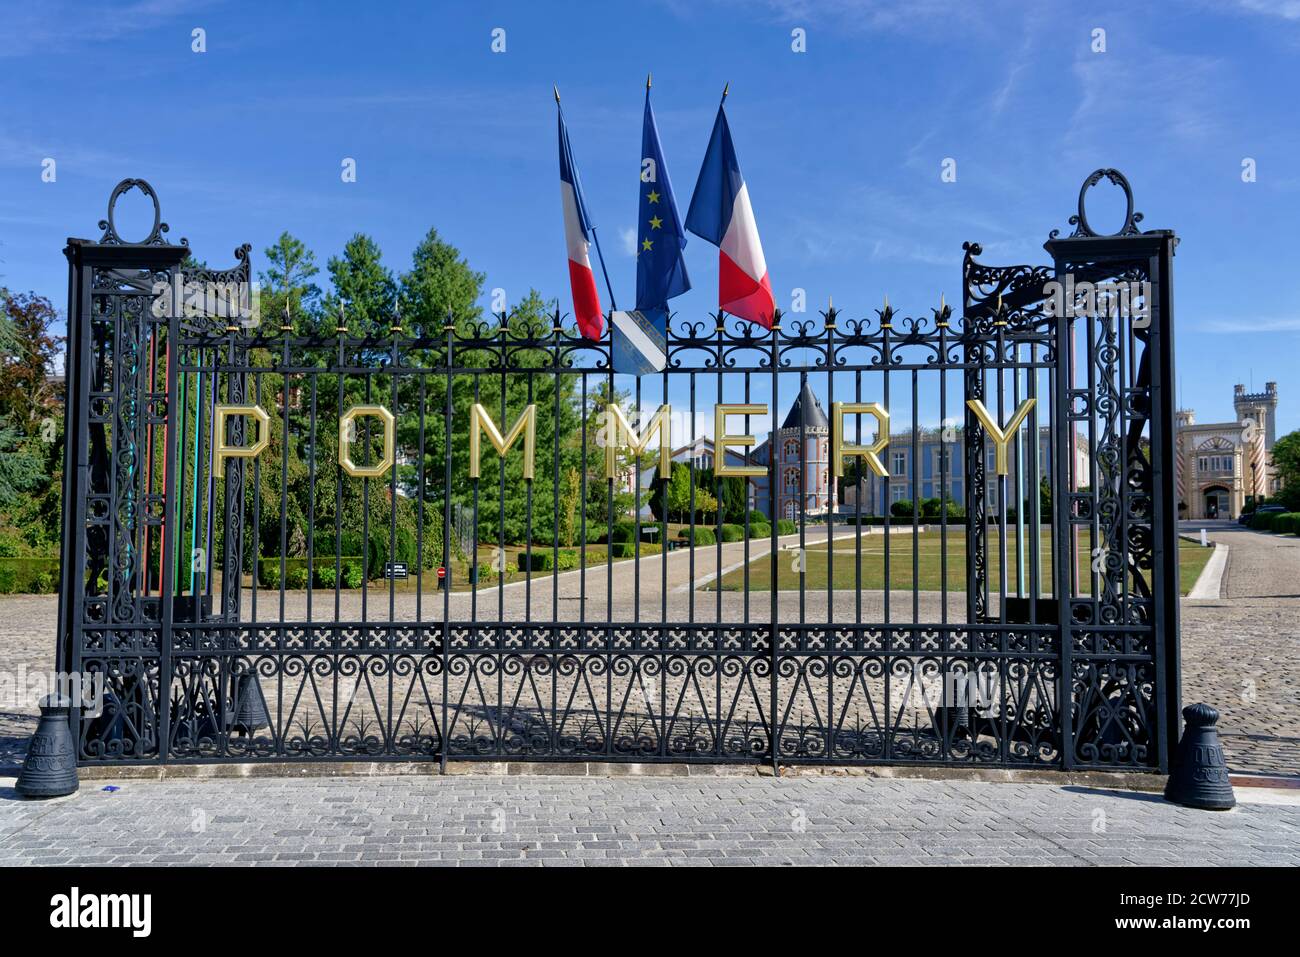 Eingangstor zum Champagner Haus Pommery, Reims, Champagne, Frankreich Stock Photo